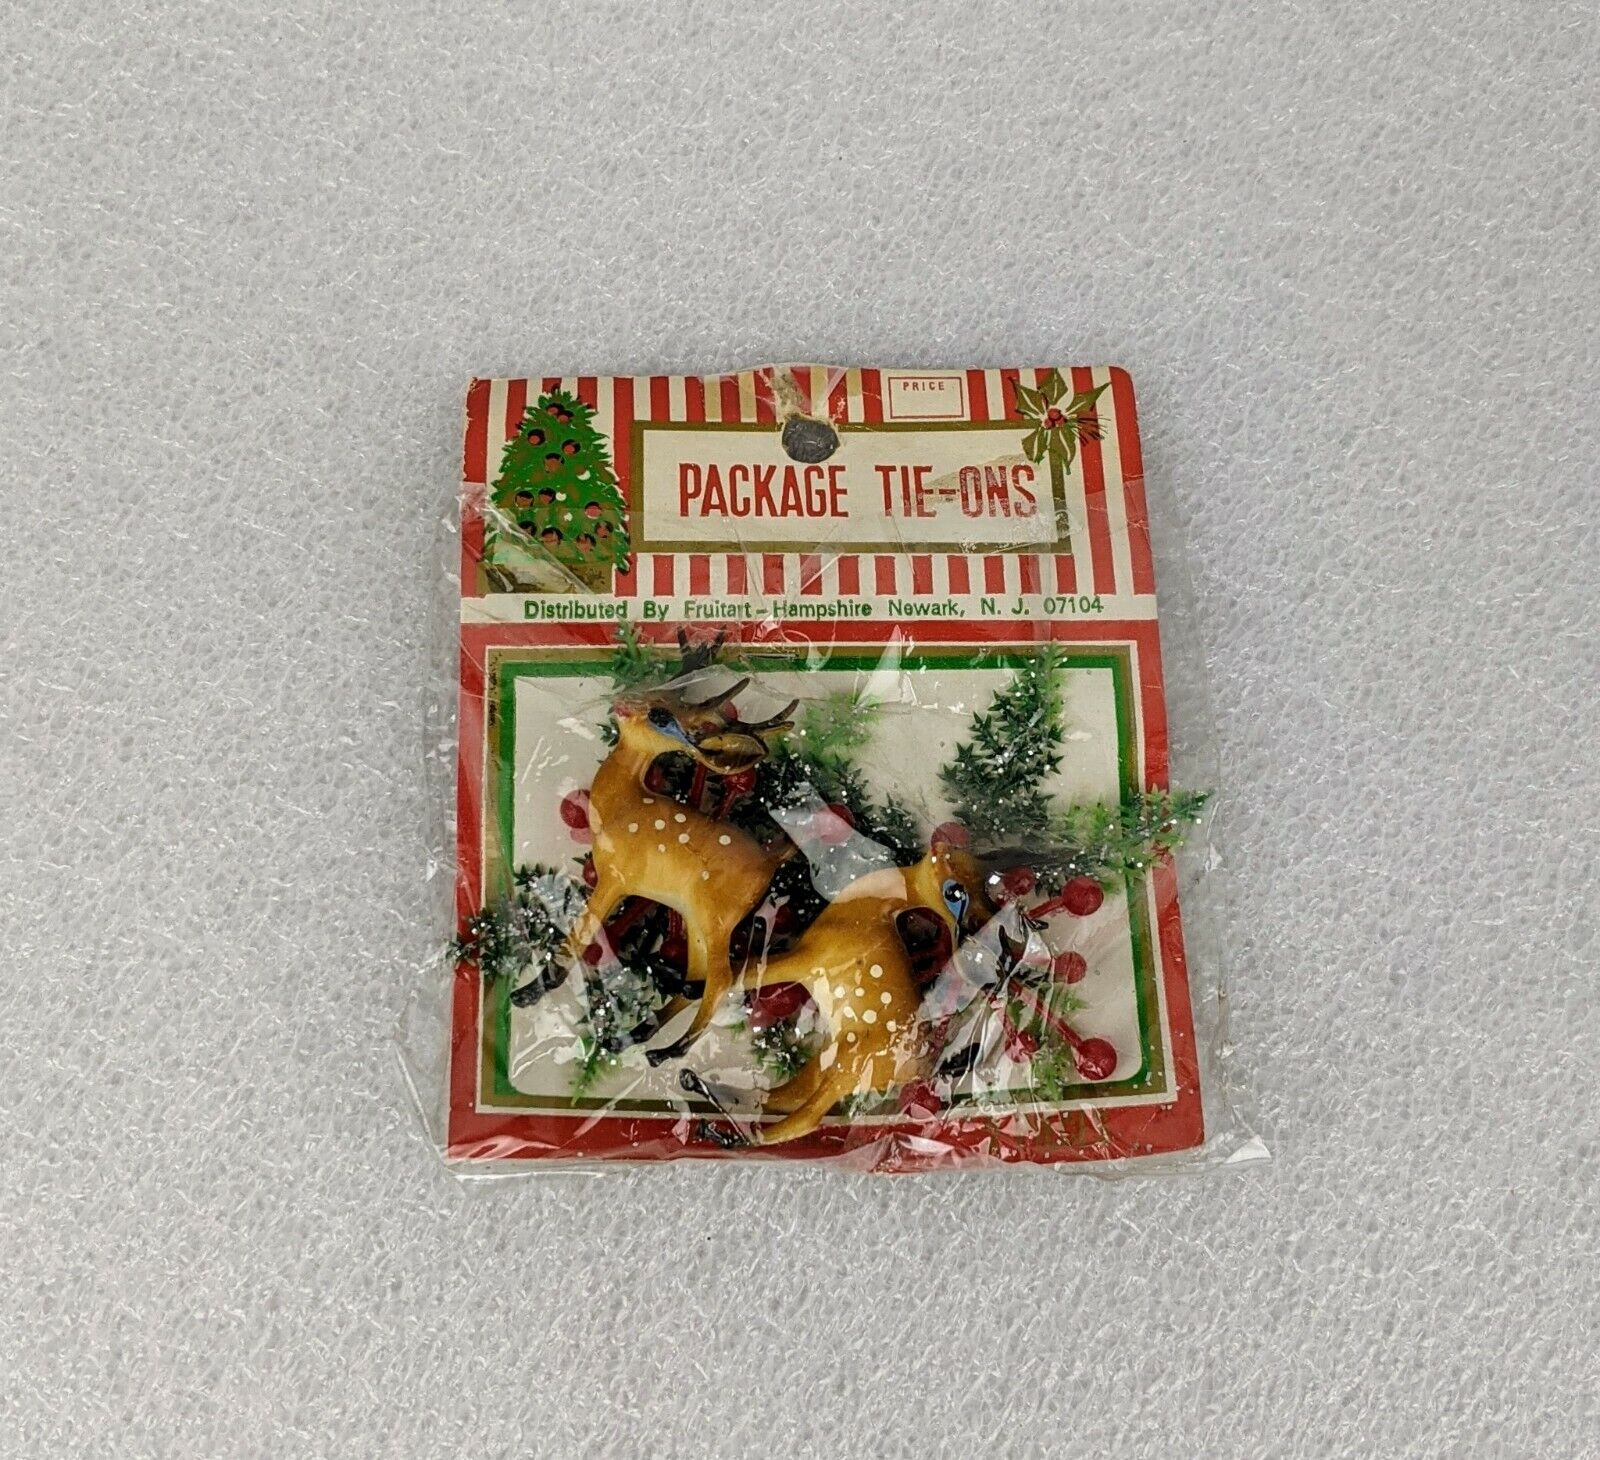 VTG Christmas Gift Wrap Package Tie On Reindeer Deer Holly Craft Decor Fruitart